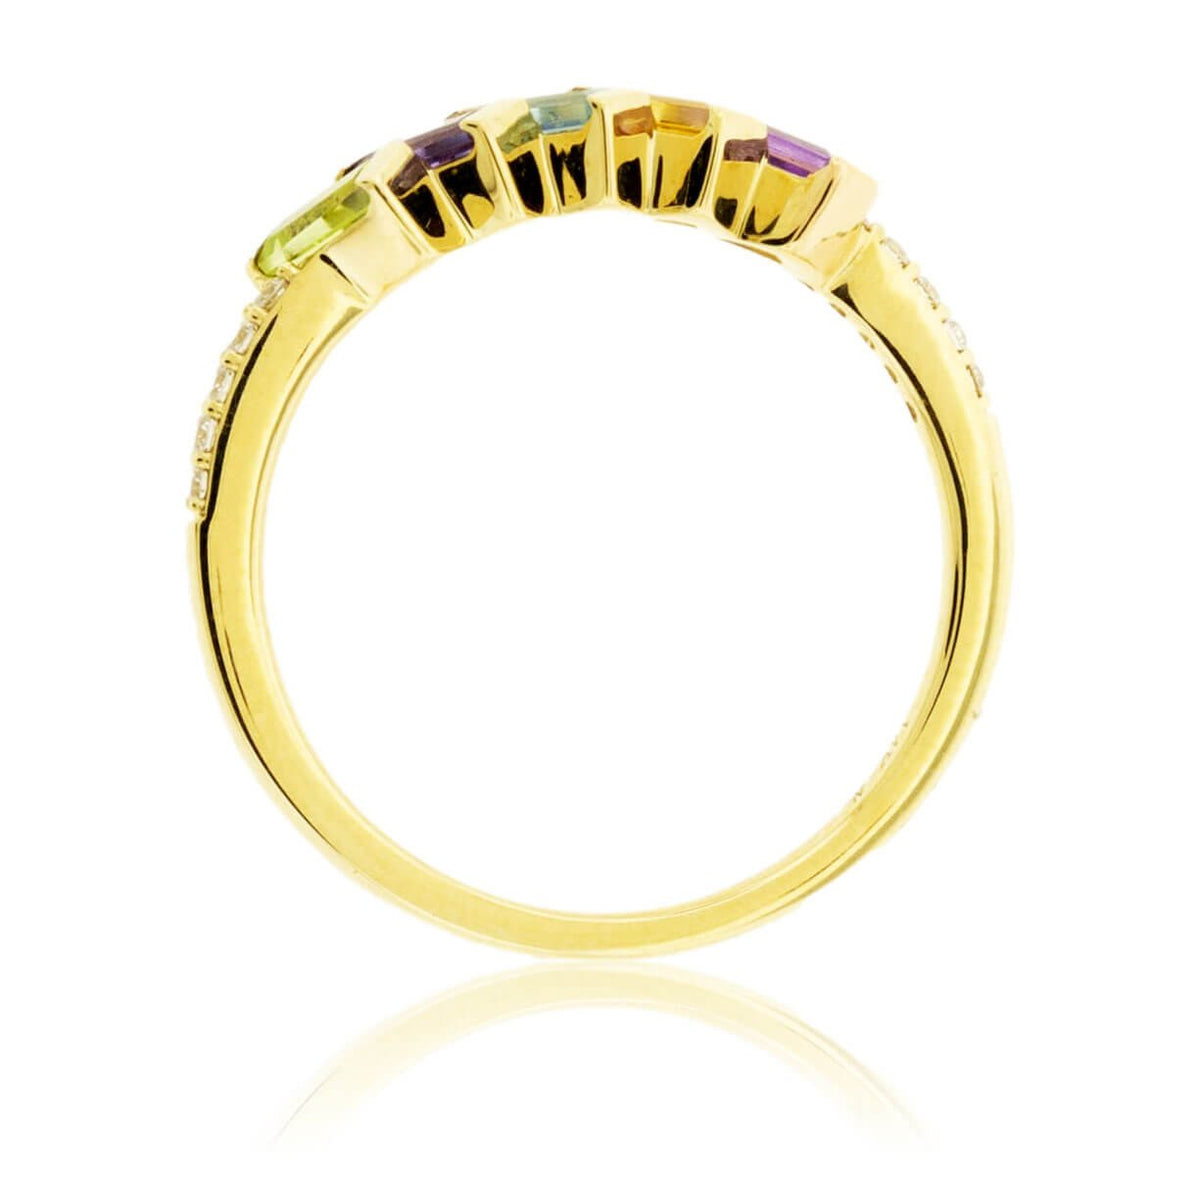 Step Cut Mixed Gemstone Rainbow Ring - Park City Jewelers